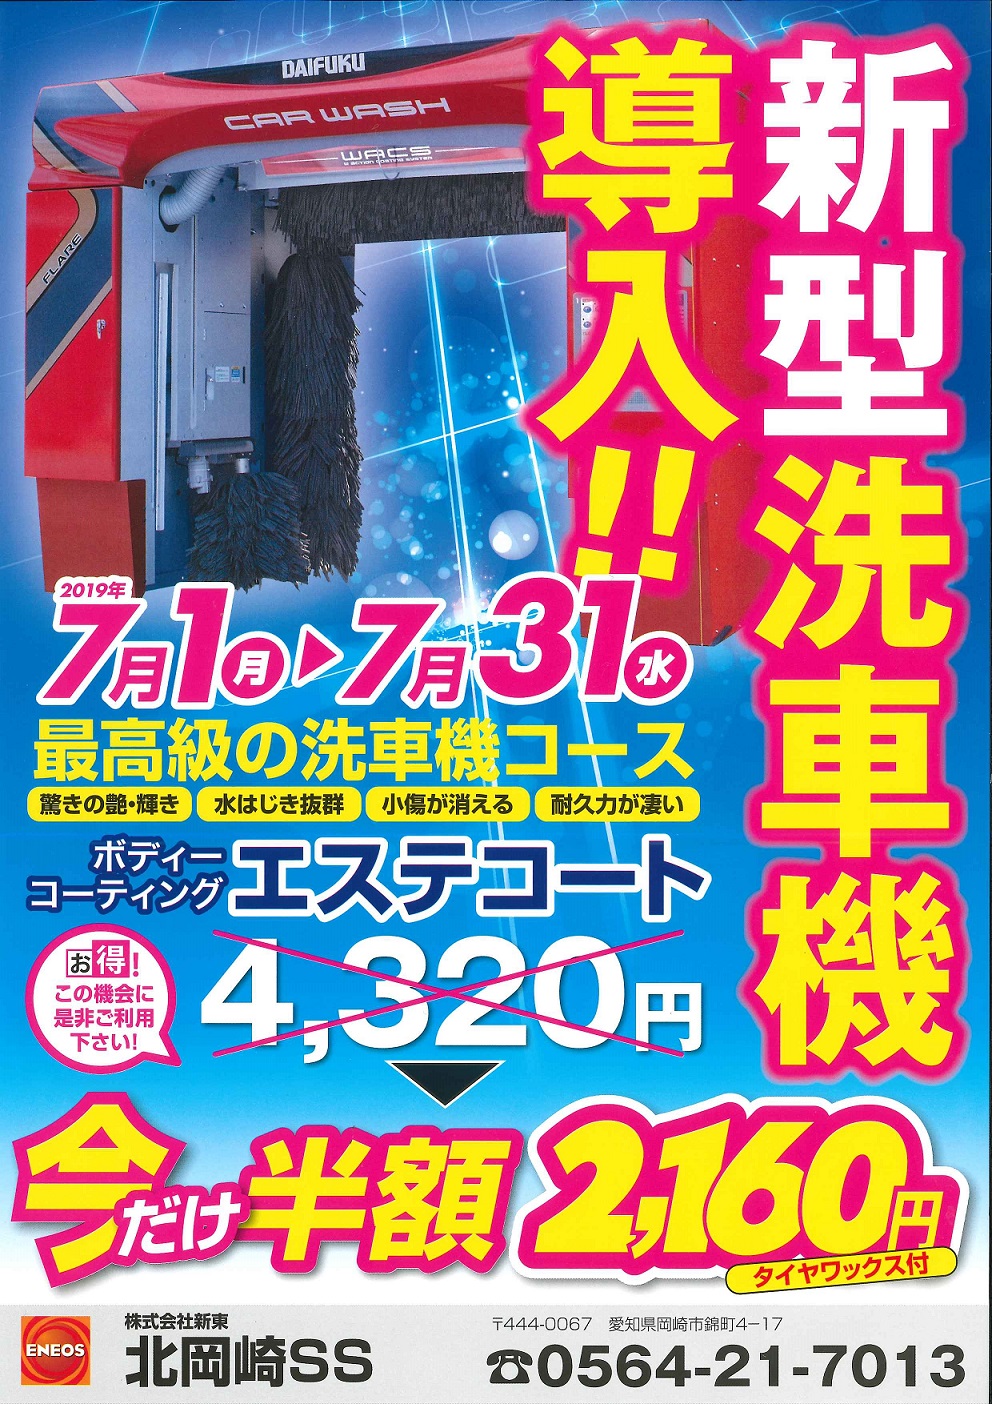 http://www.shinto.co.jp/news/wash_machine.jpg